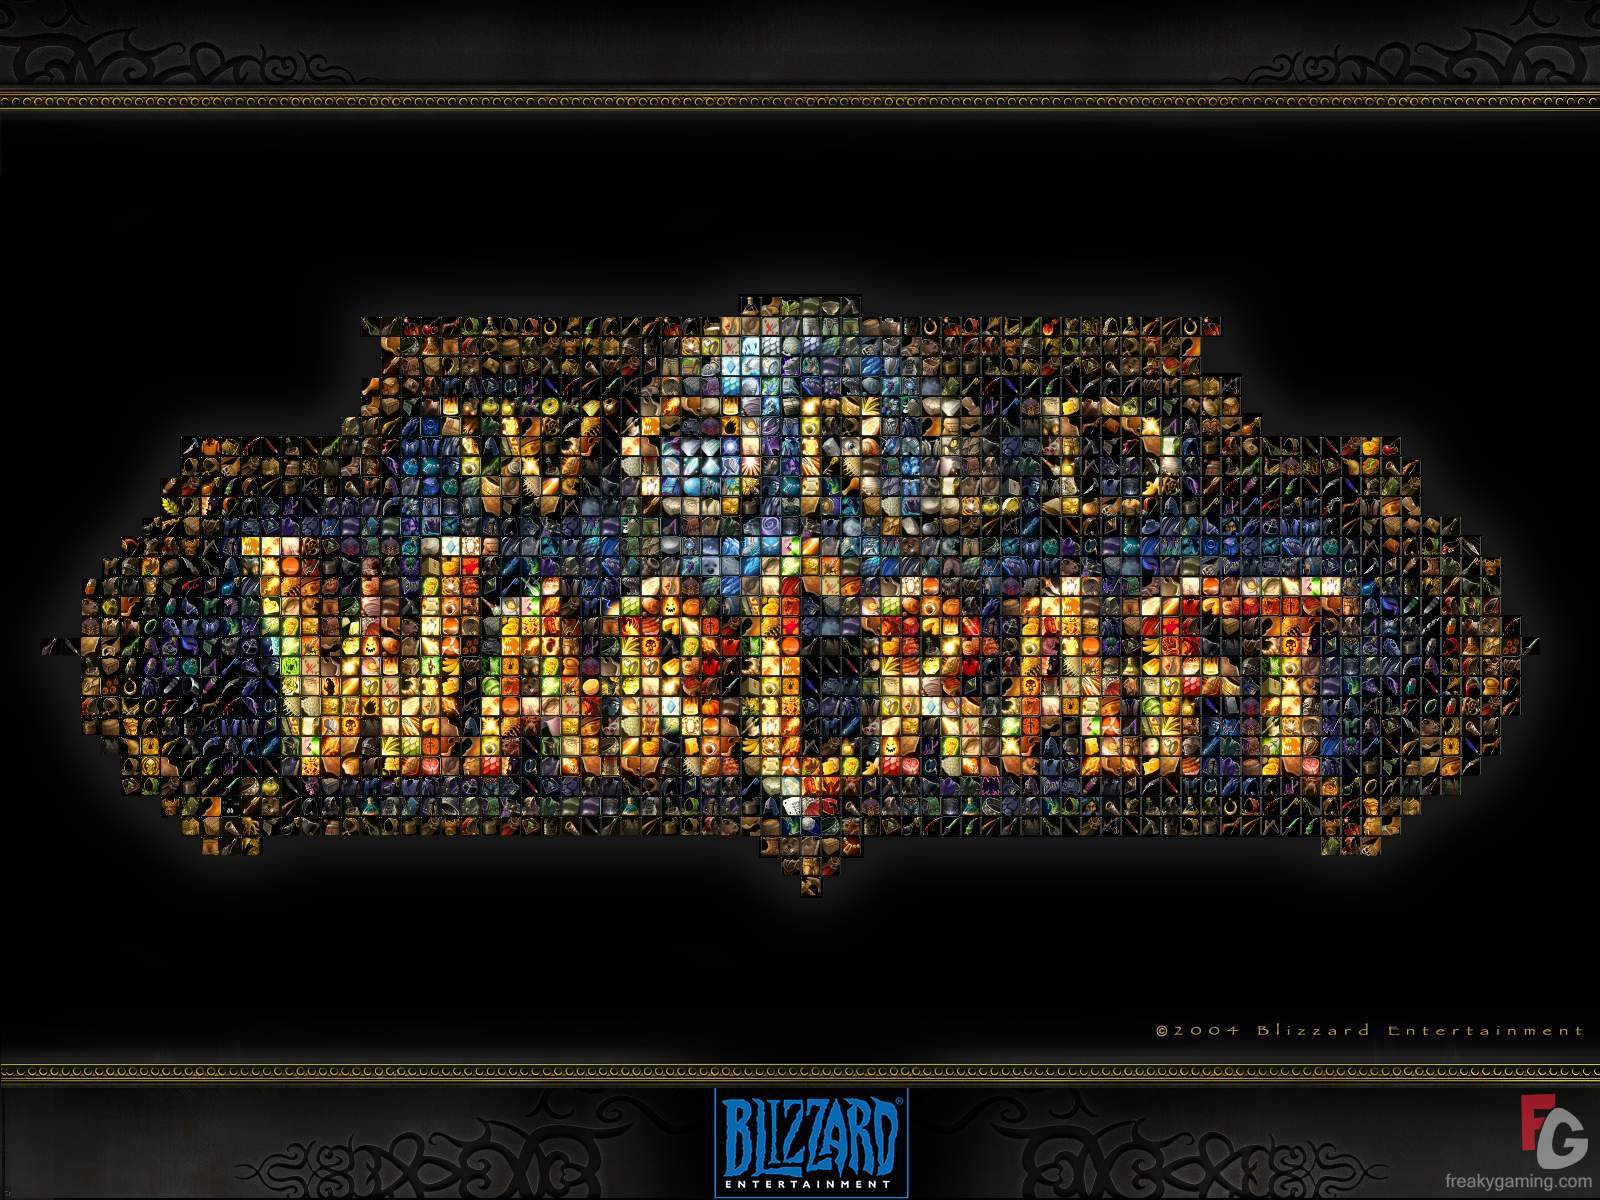 World Warcraft